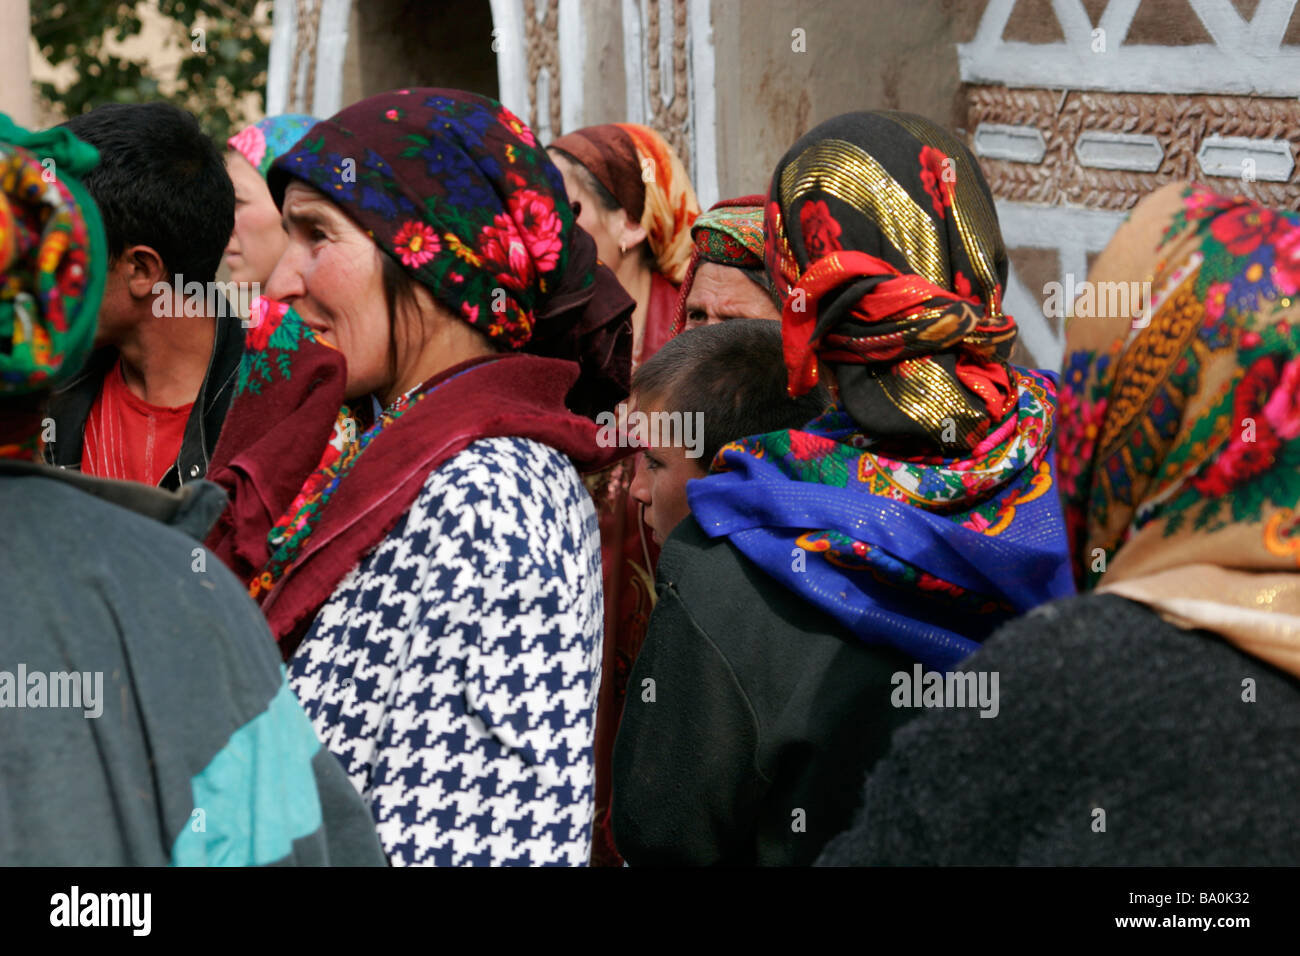 Tajik women wearing traditional headscarfs, Tajikistan, Central Asia Stock Photo